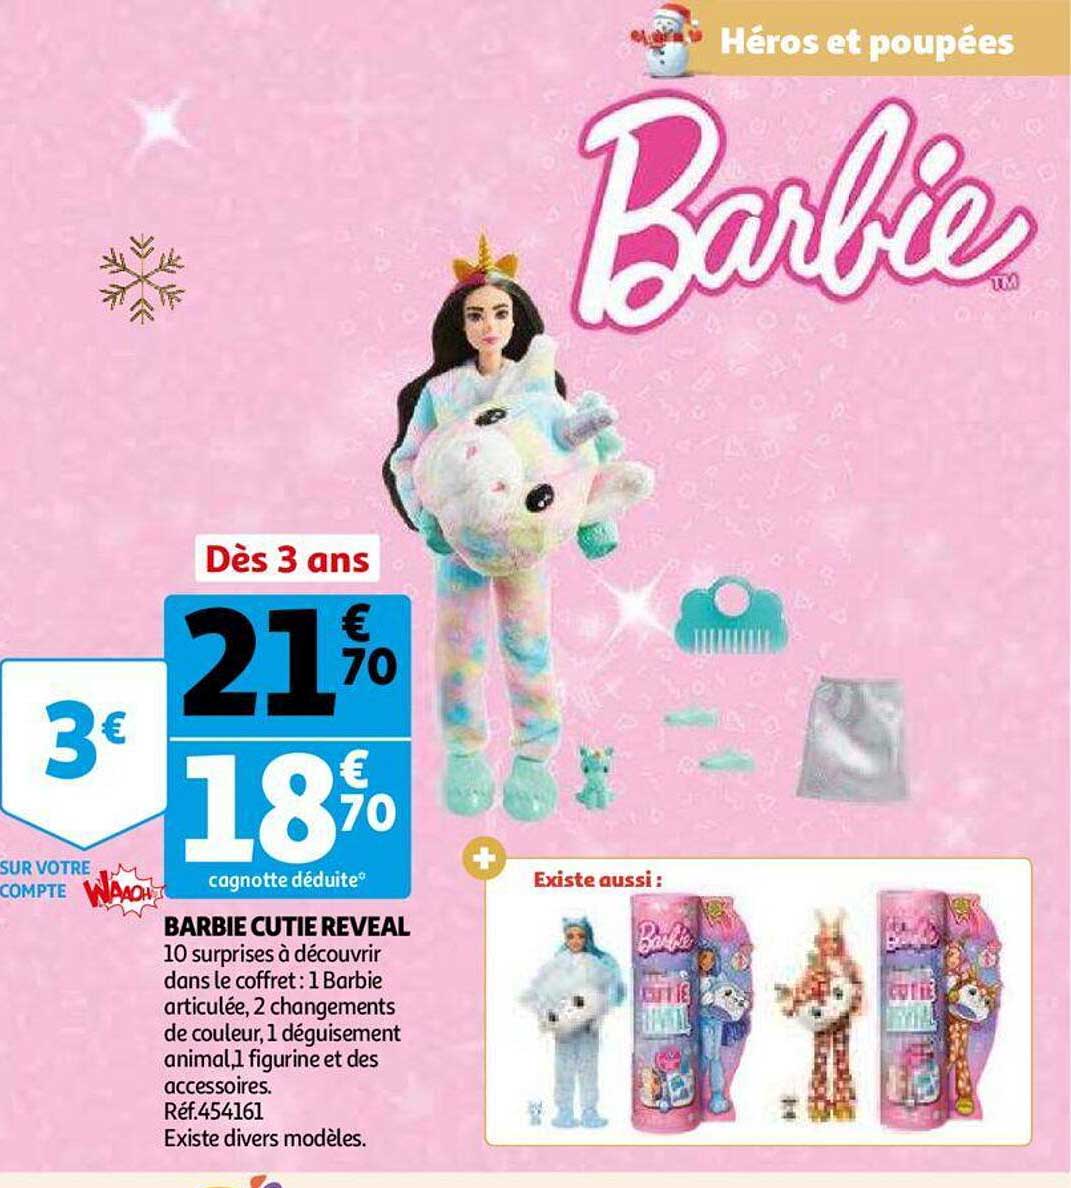 Promo Barbie barbie cutie reveal chez Hyper U